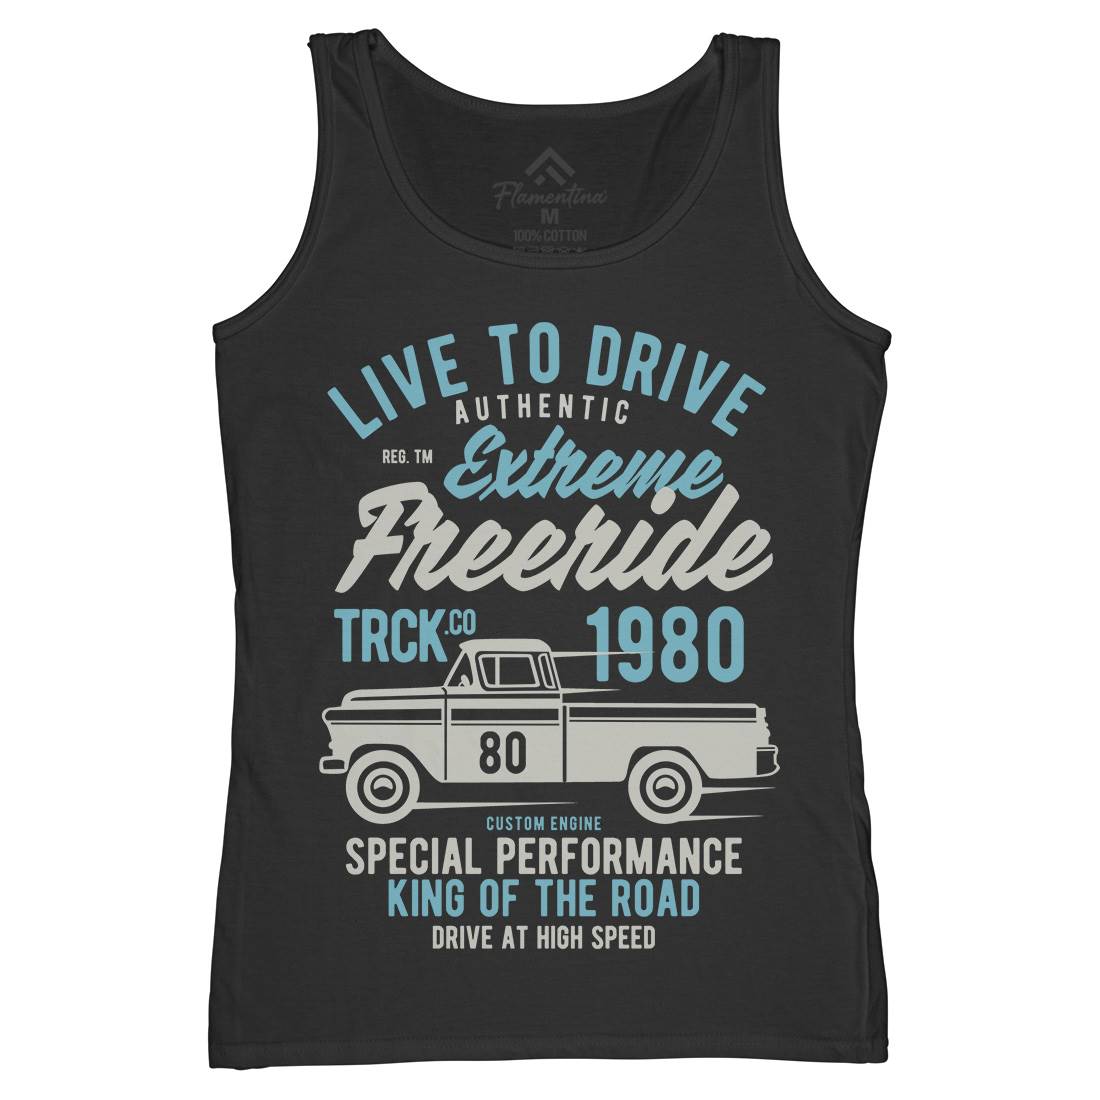 Extreme Freeride Truck Womens Organic Tank Top Vest Cars B401